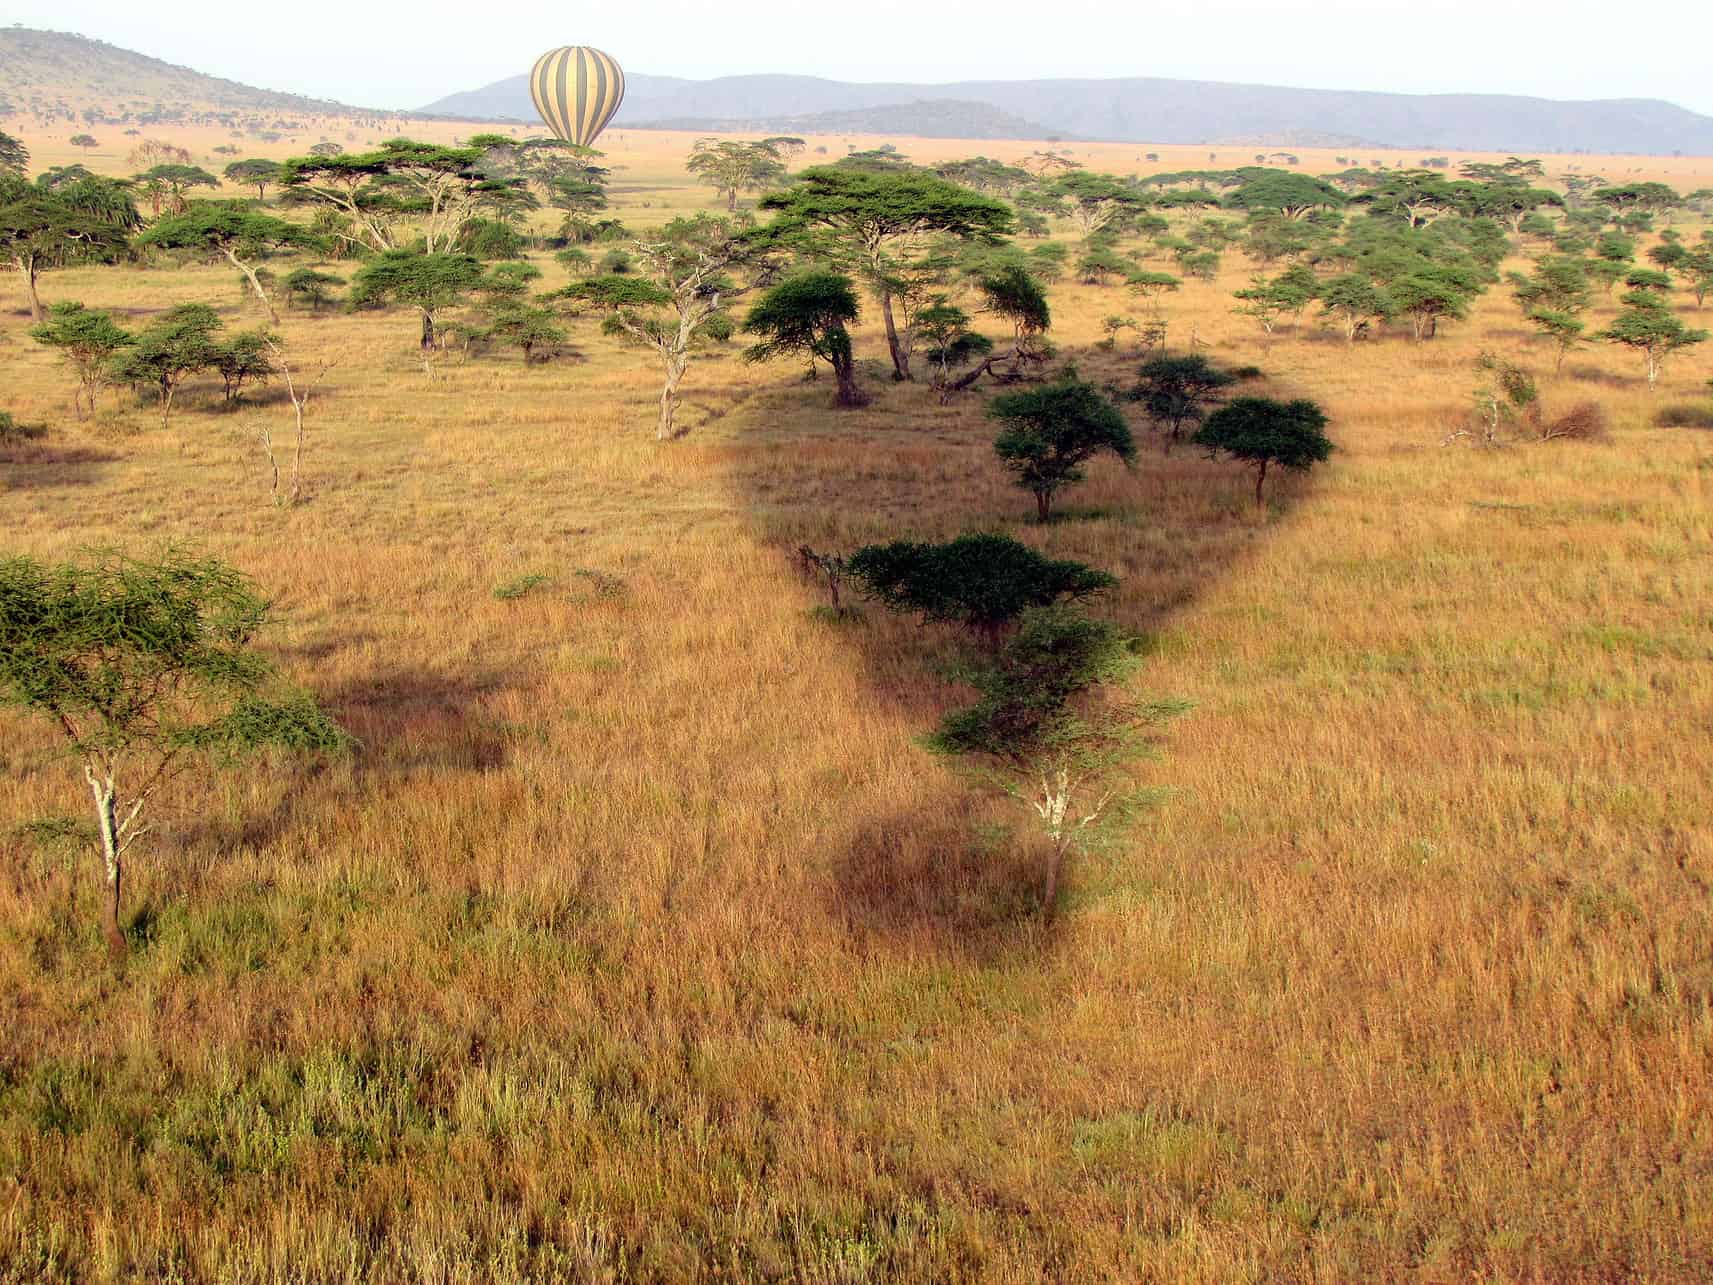 Hot Air Balloon ride in the Serengeti. Photo by David Berkowitz via flickr.